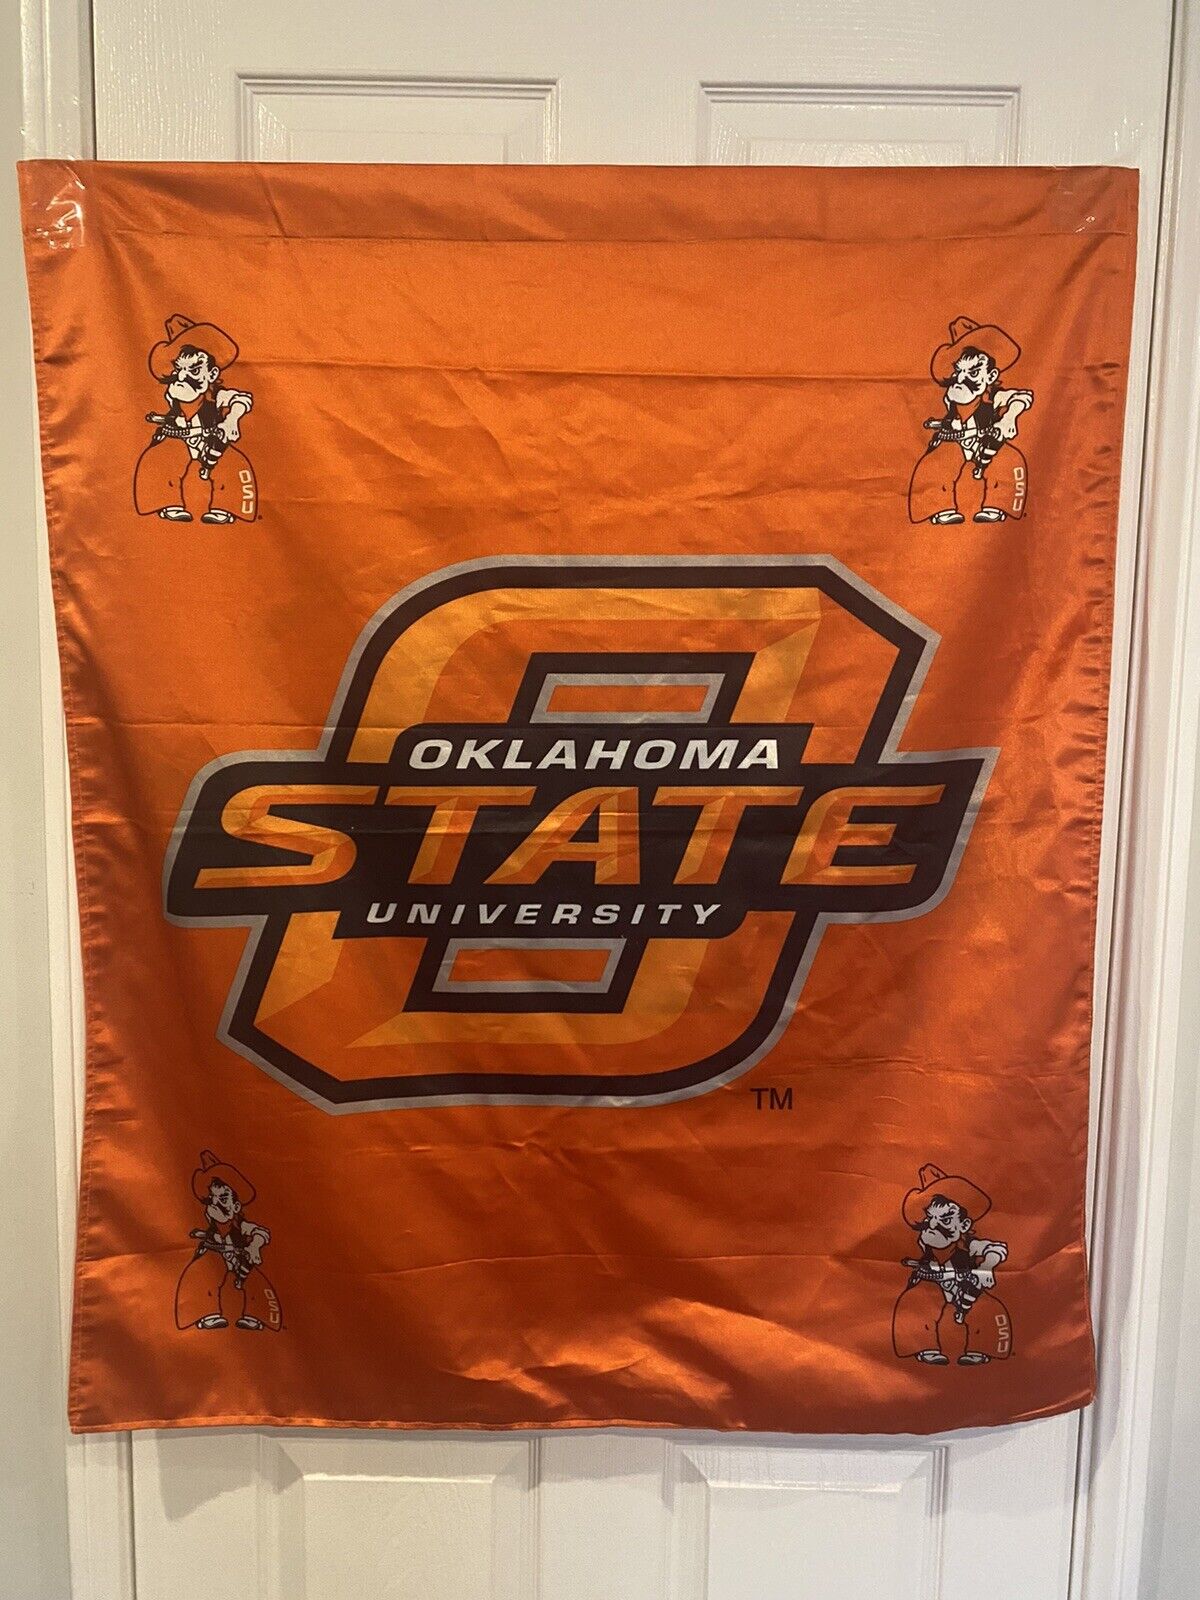 OSU Pistol Pete Oklahoma State University Mascot Flag Banner 32x39” Large